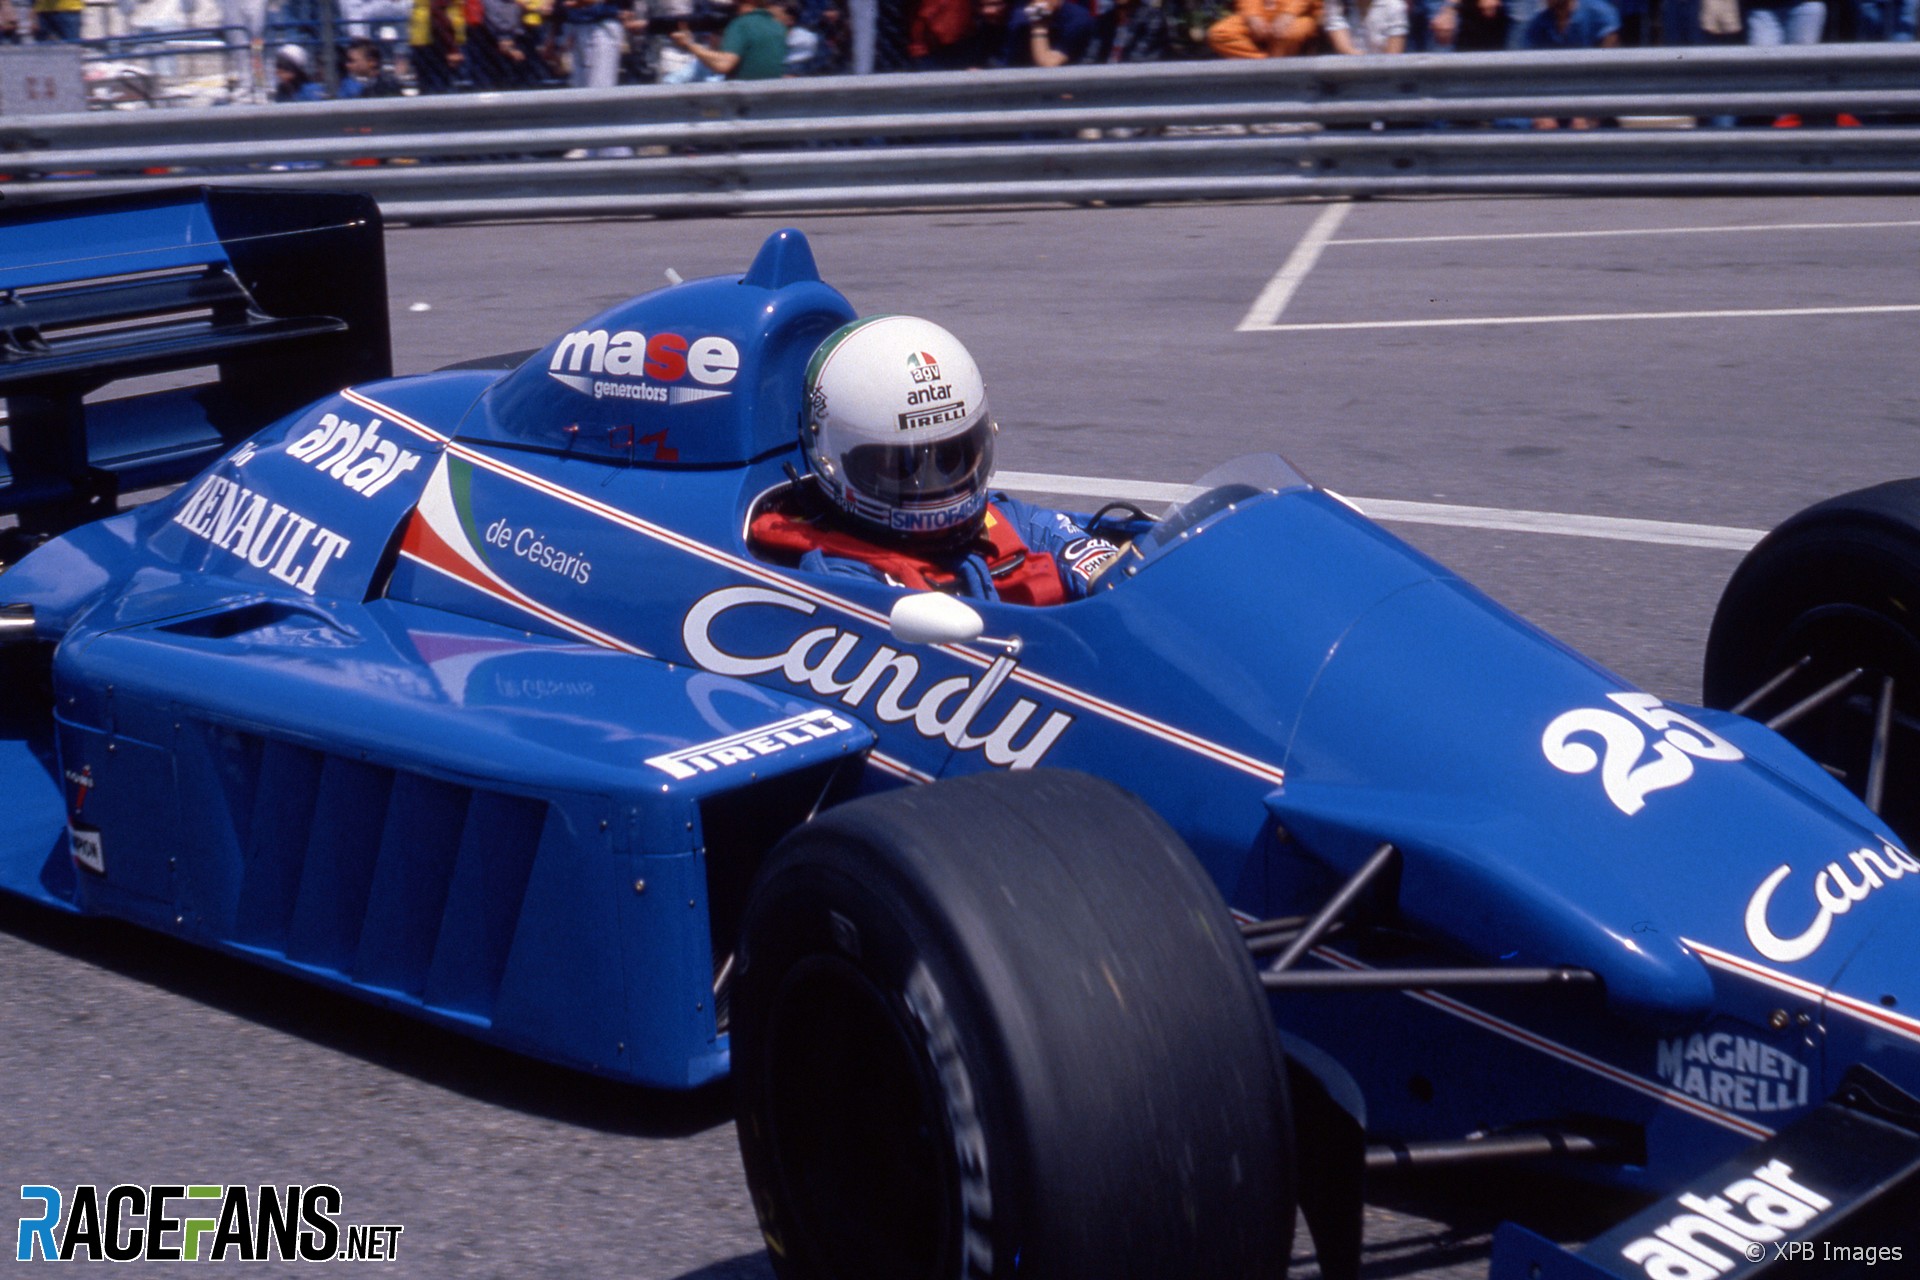 Andrea de Cesaris, Ligier, Monaco, 1985